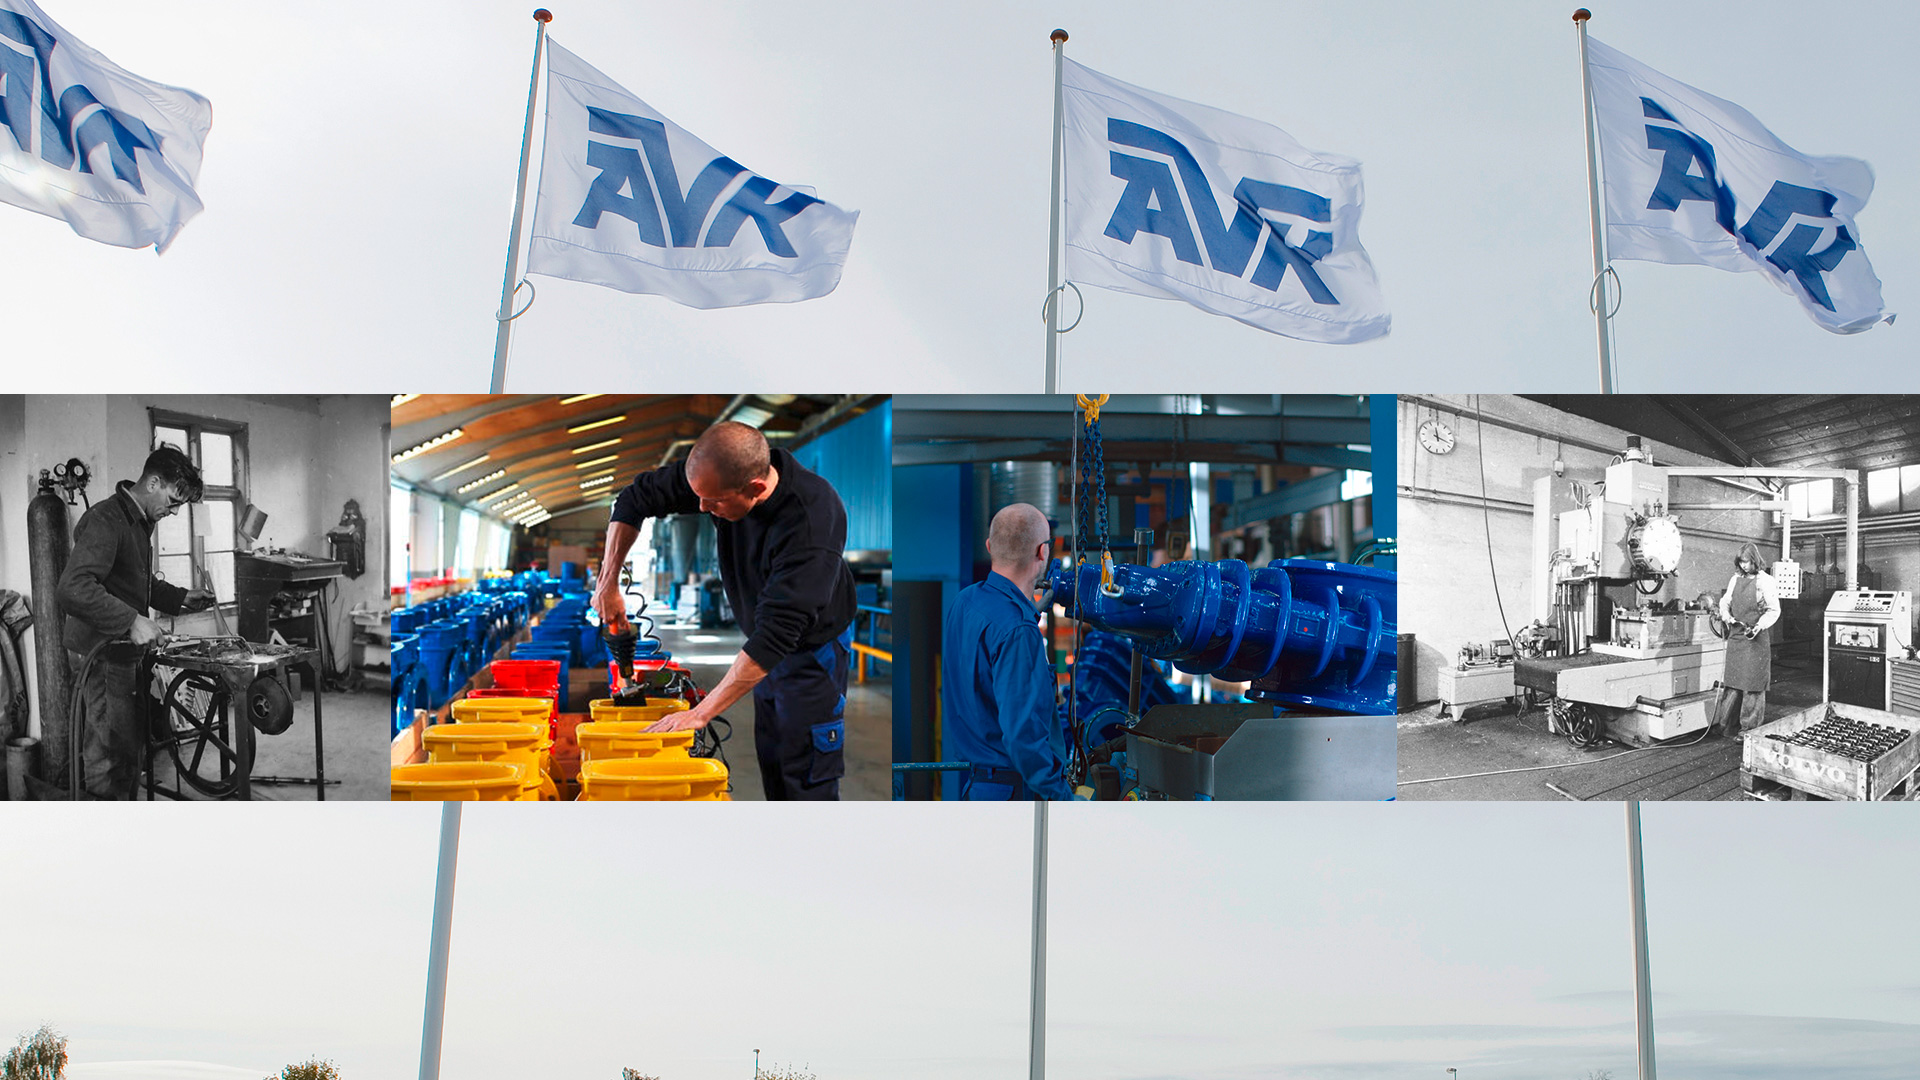 The AVK Group celebrates its 80 years anniversary